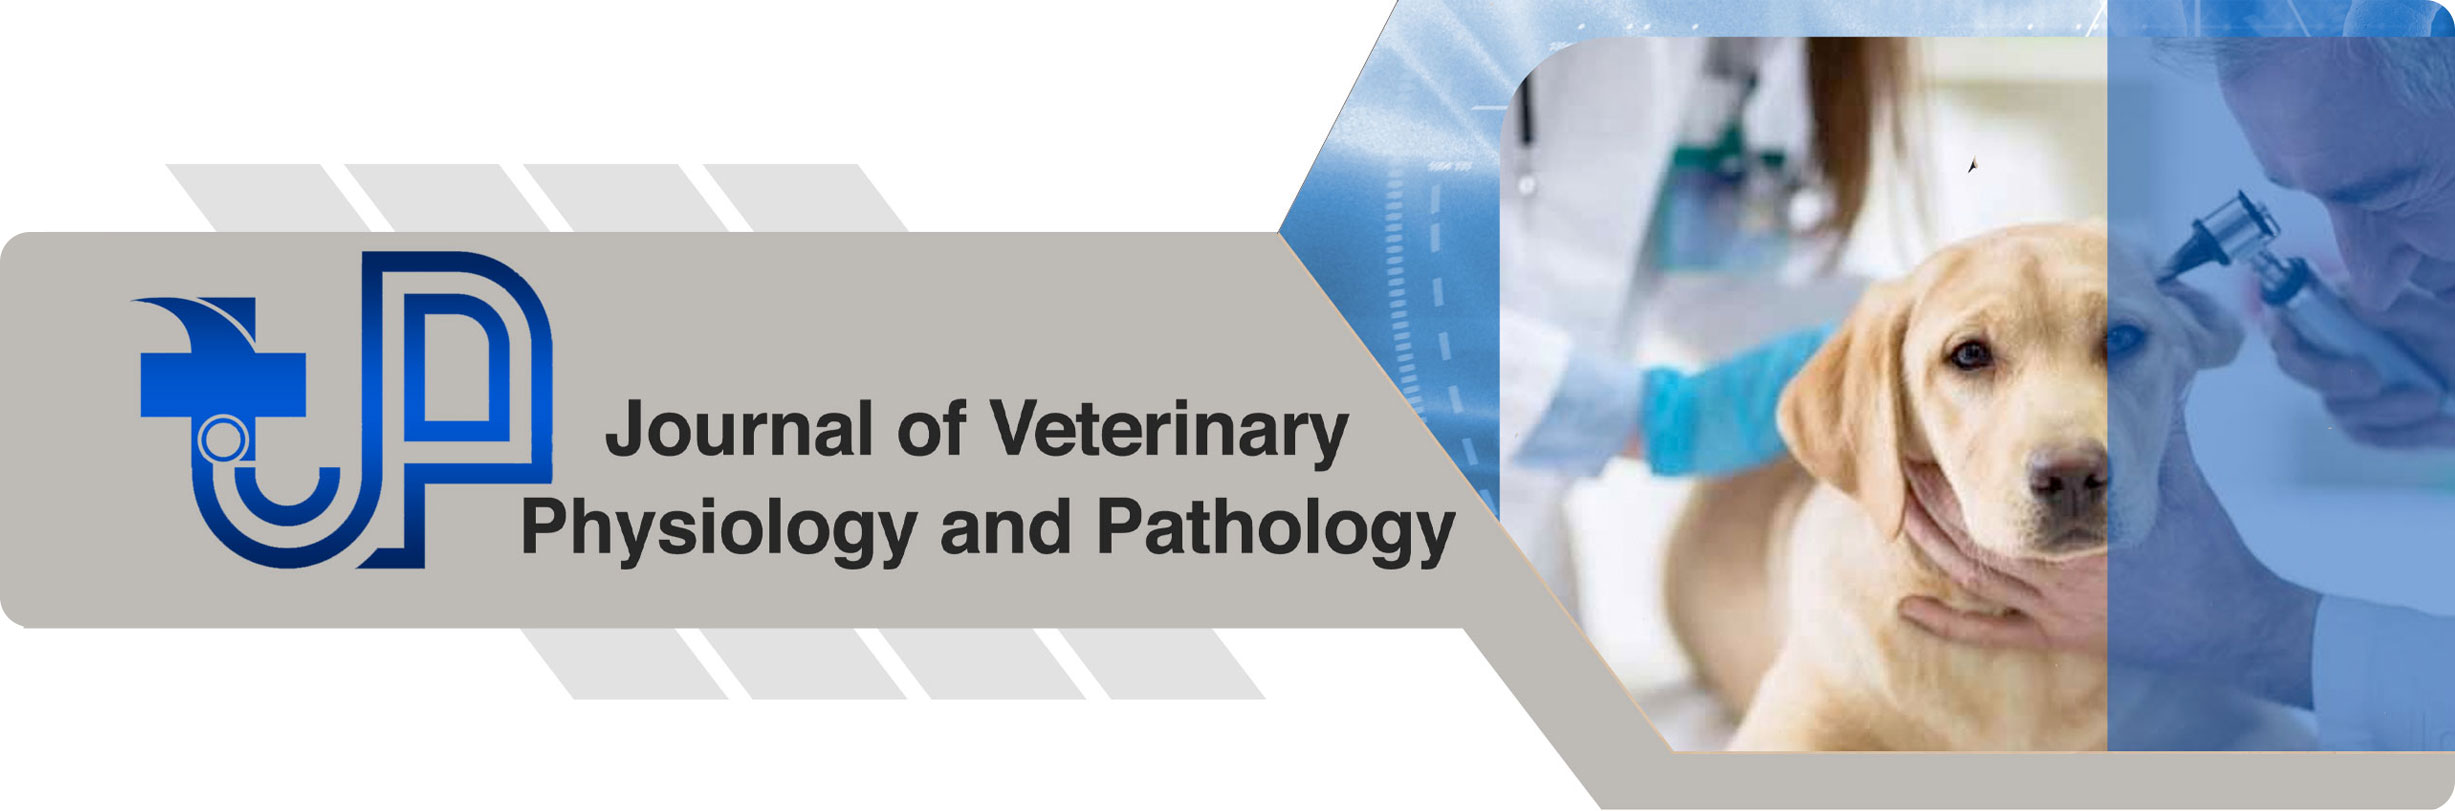 Veterinary Physiology